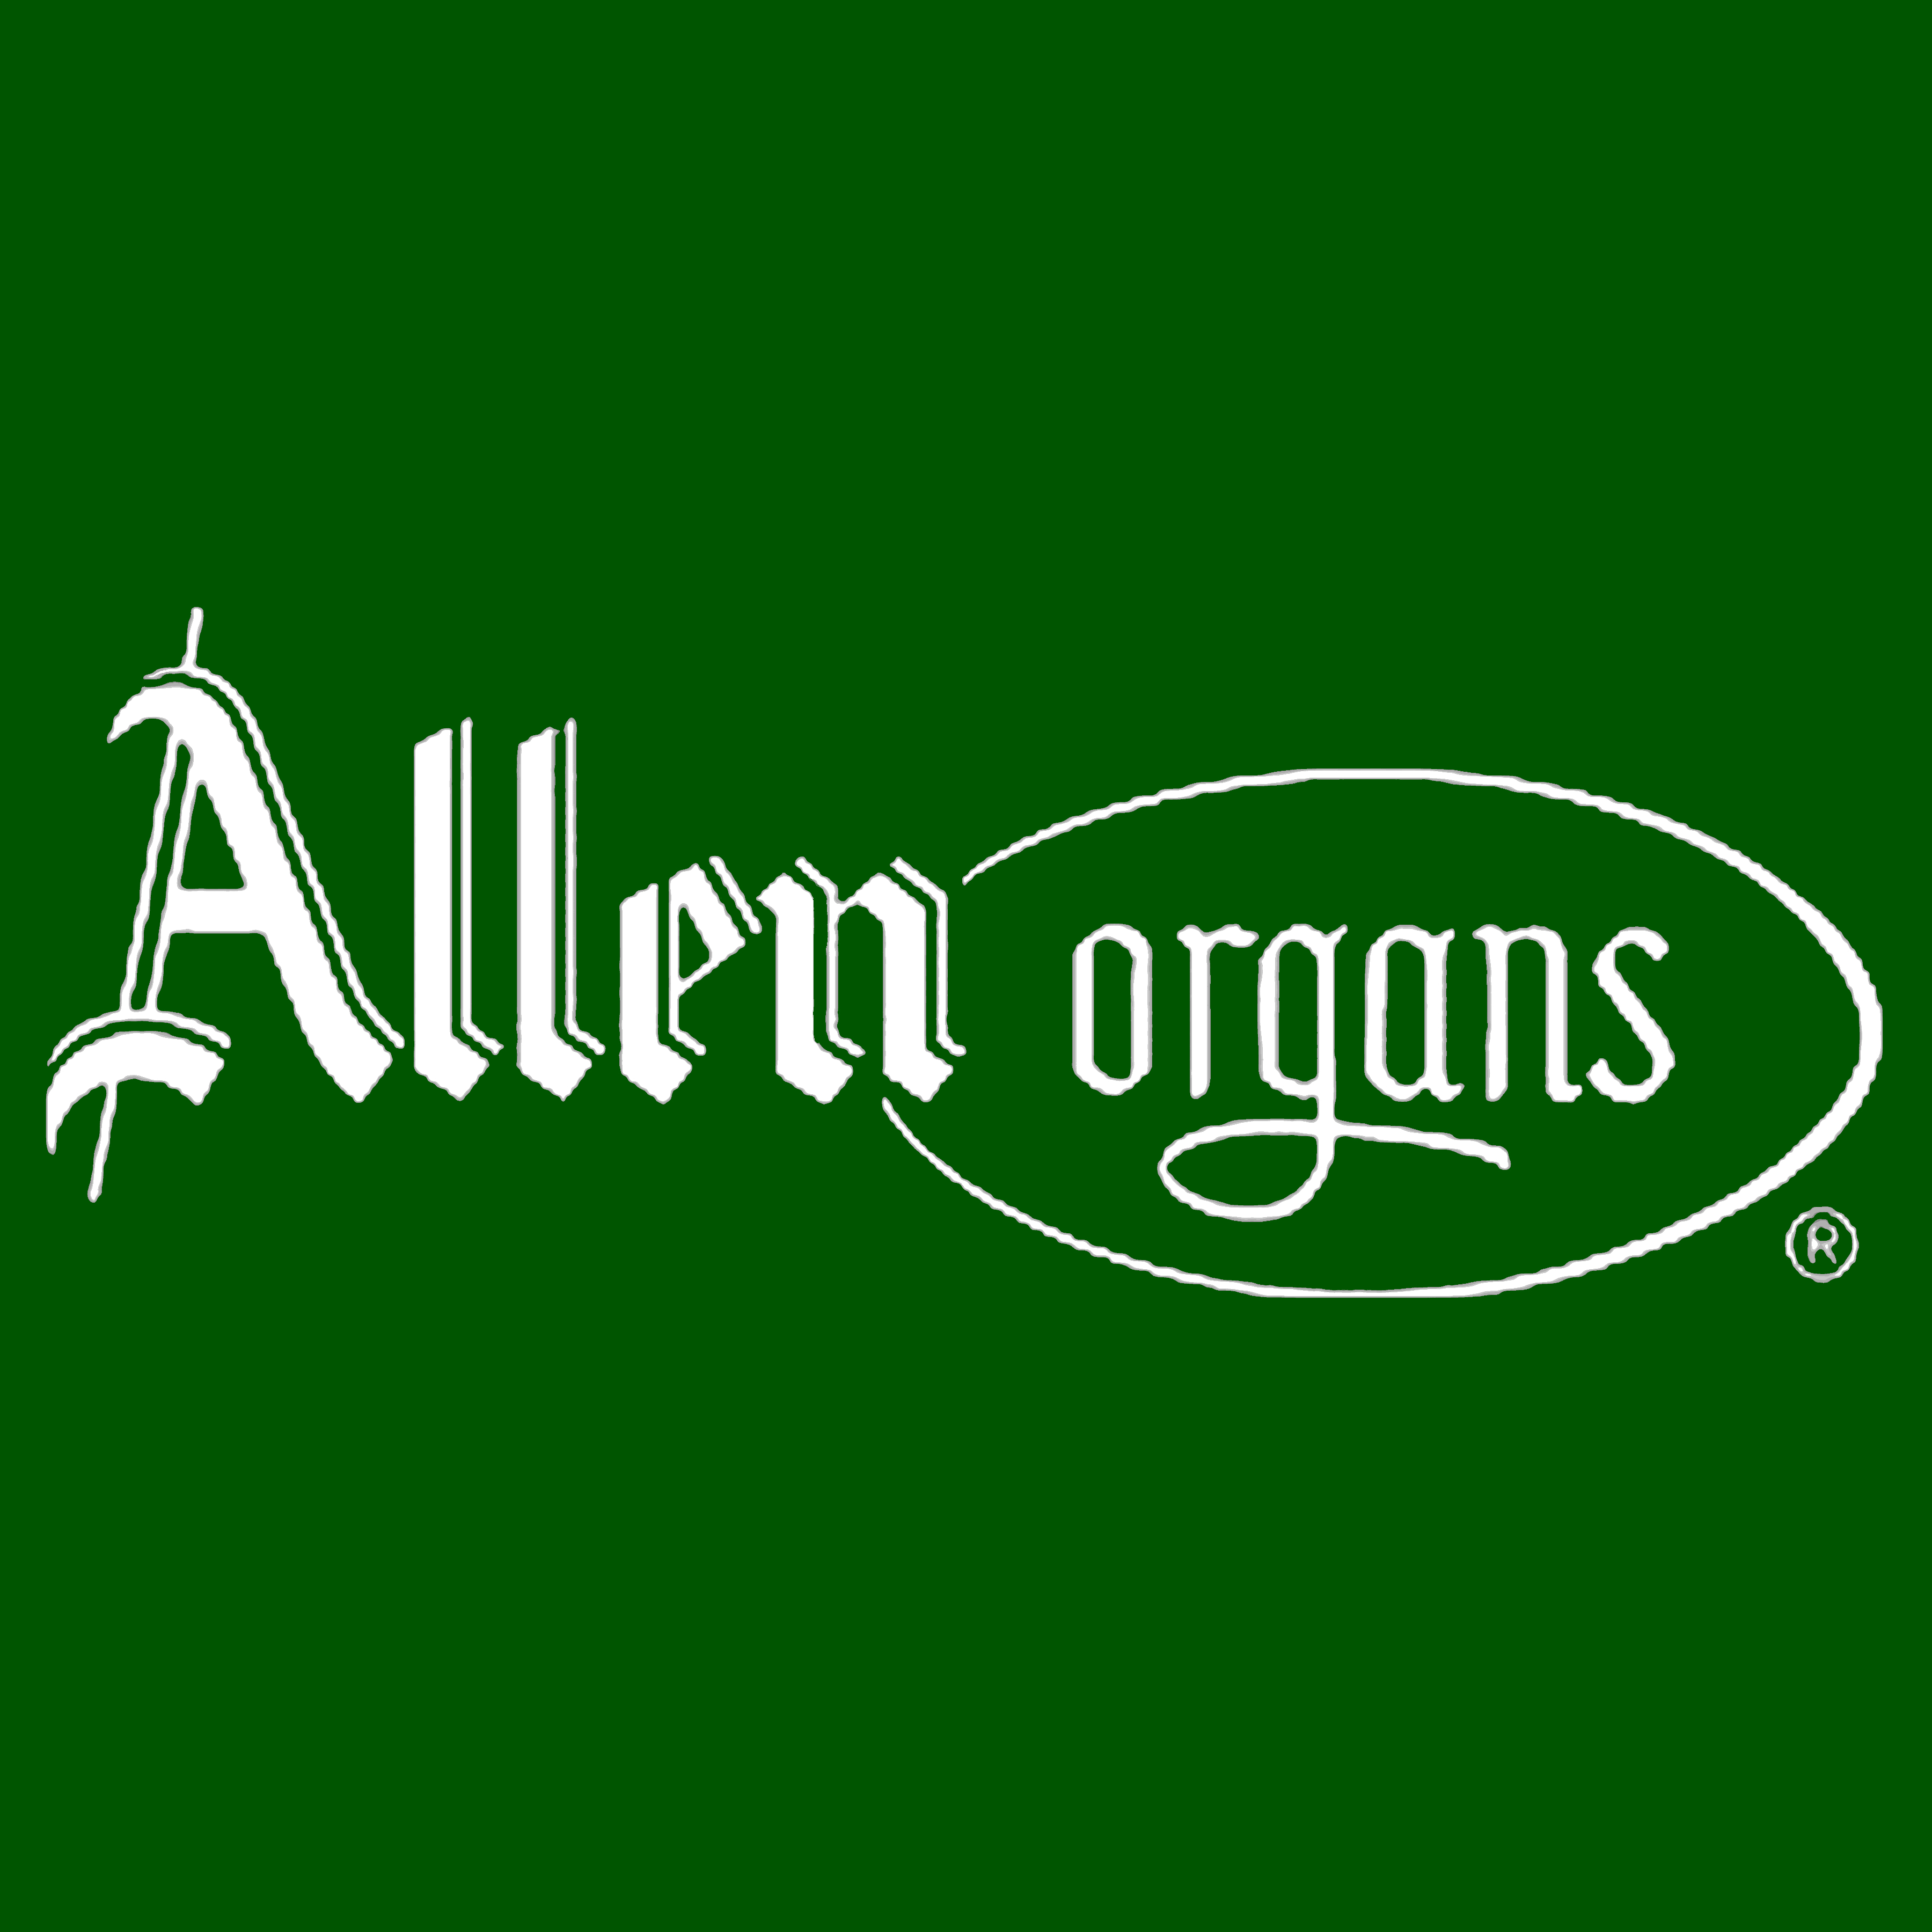 Allen Digital Computer Organ Studios WA Logo